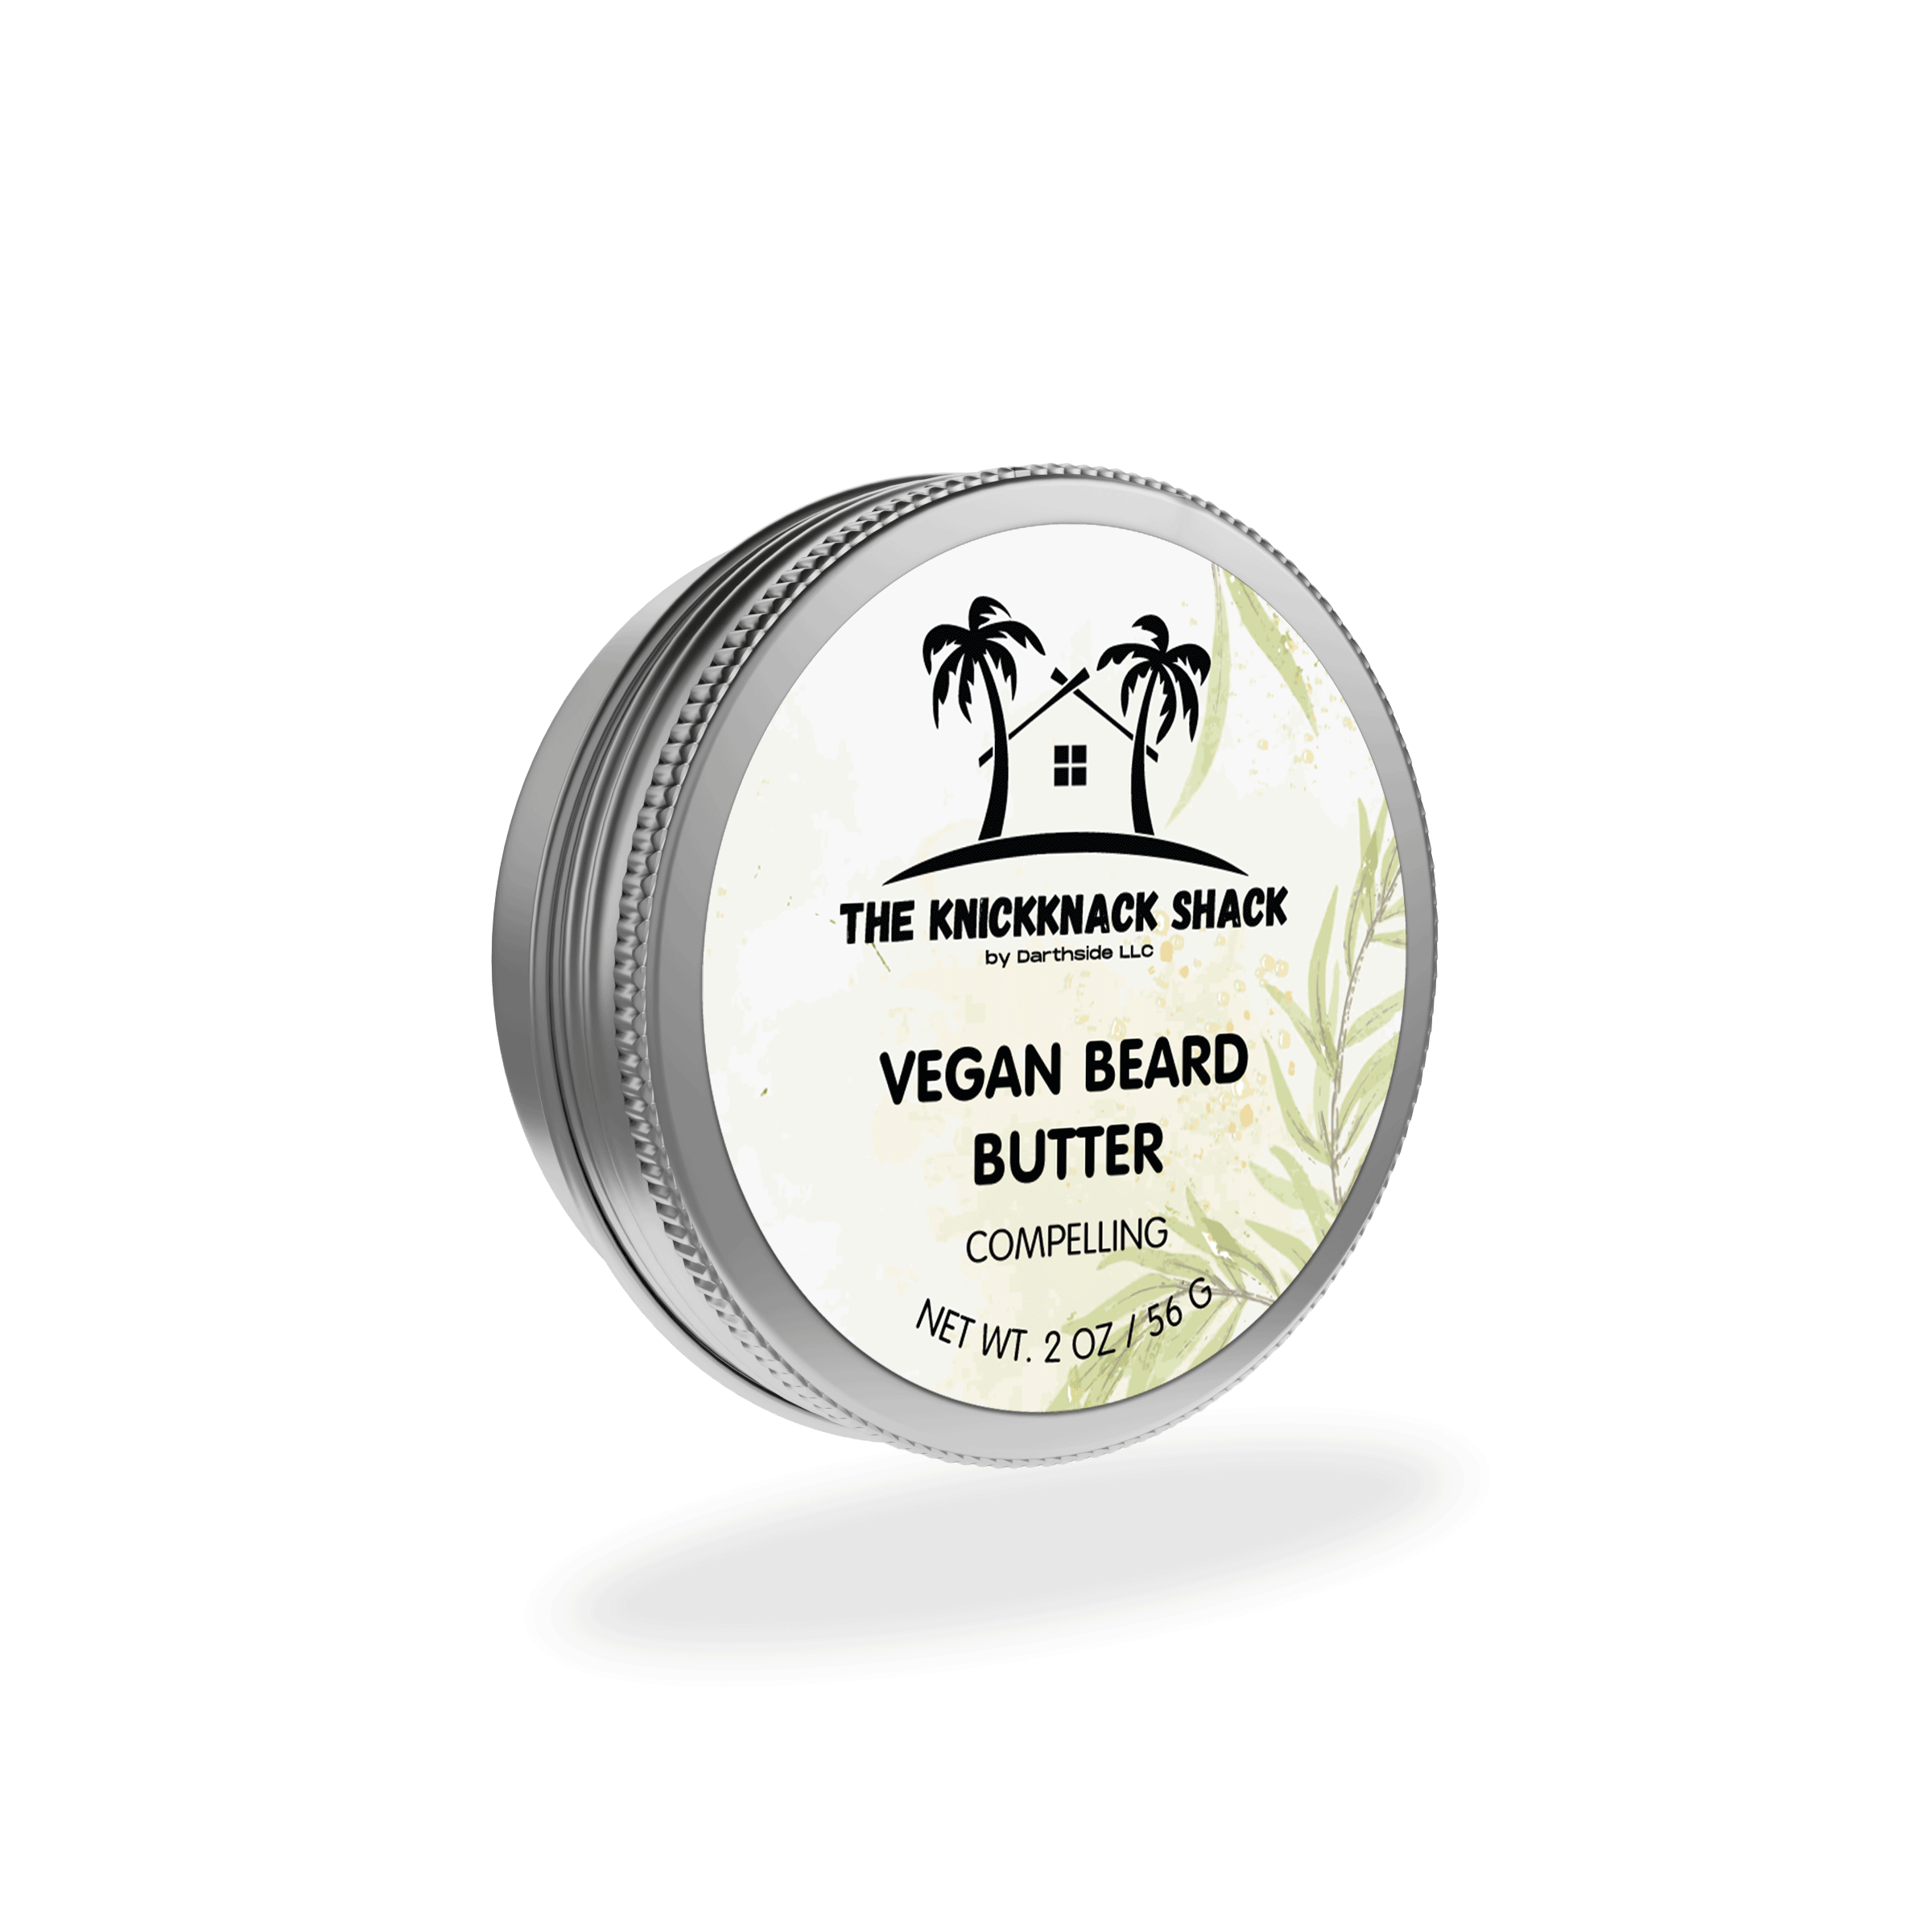 Compelling Vegan Beard Butter